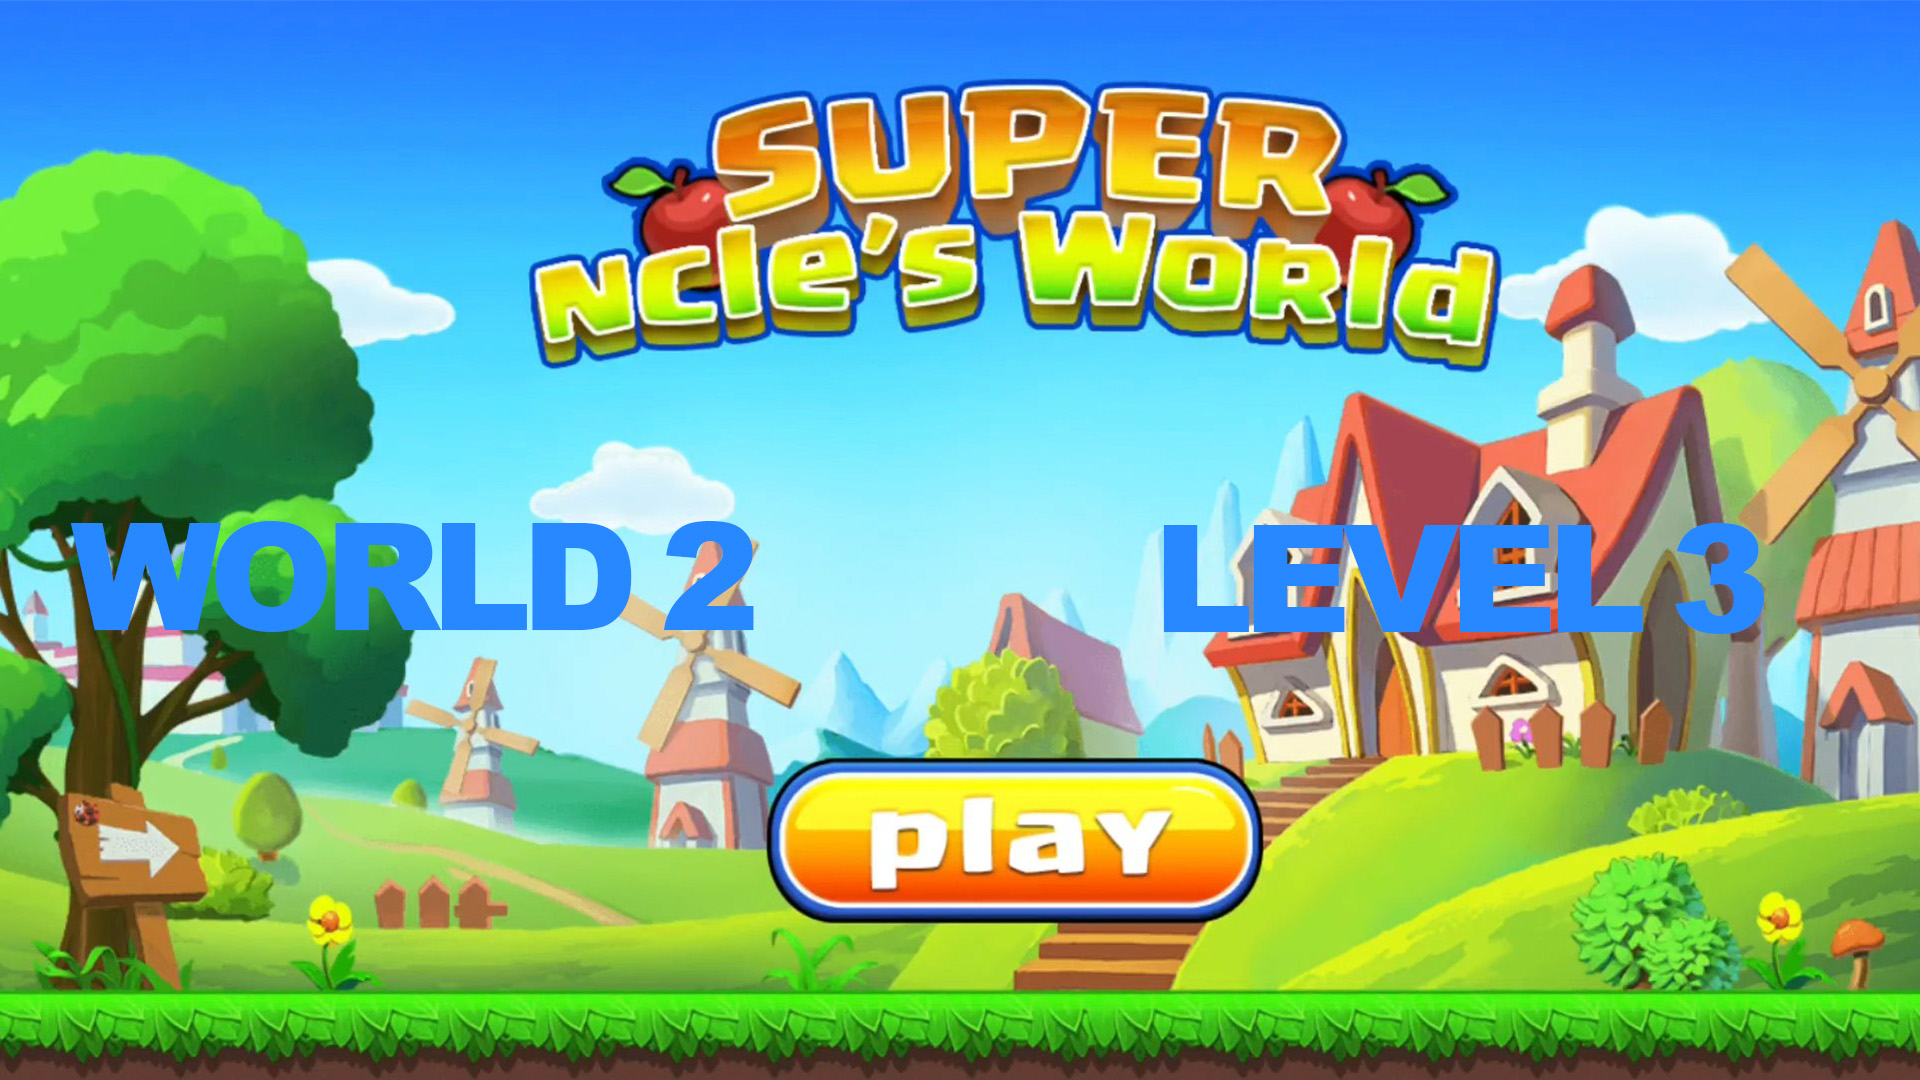 Super ncle's  World 2. levei 3.